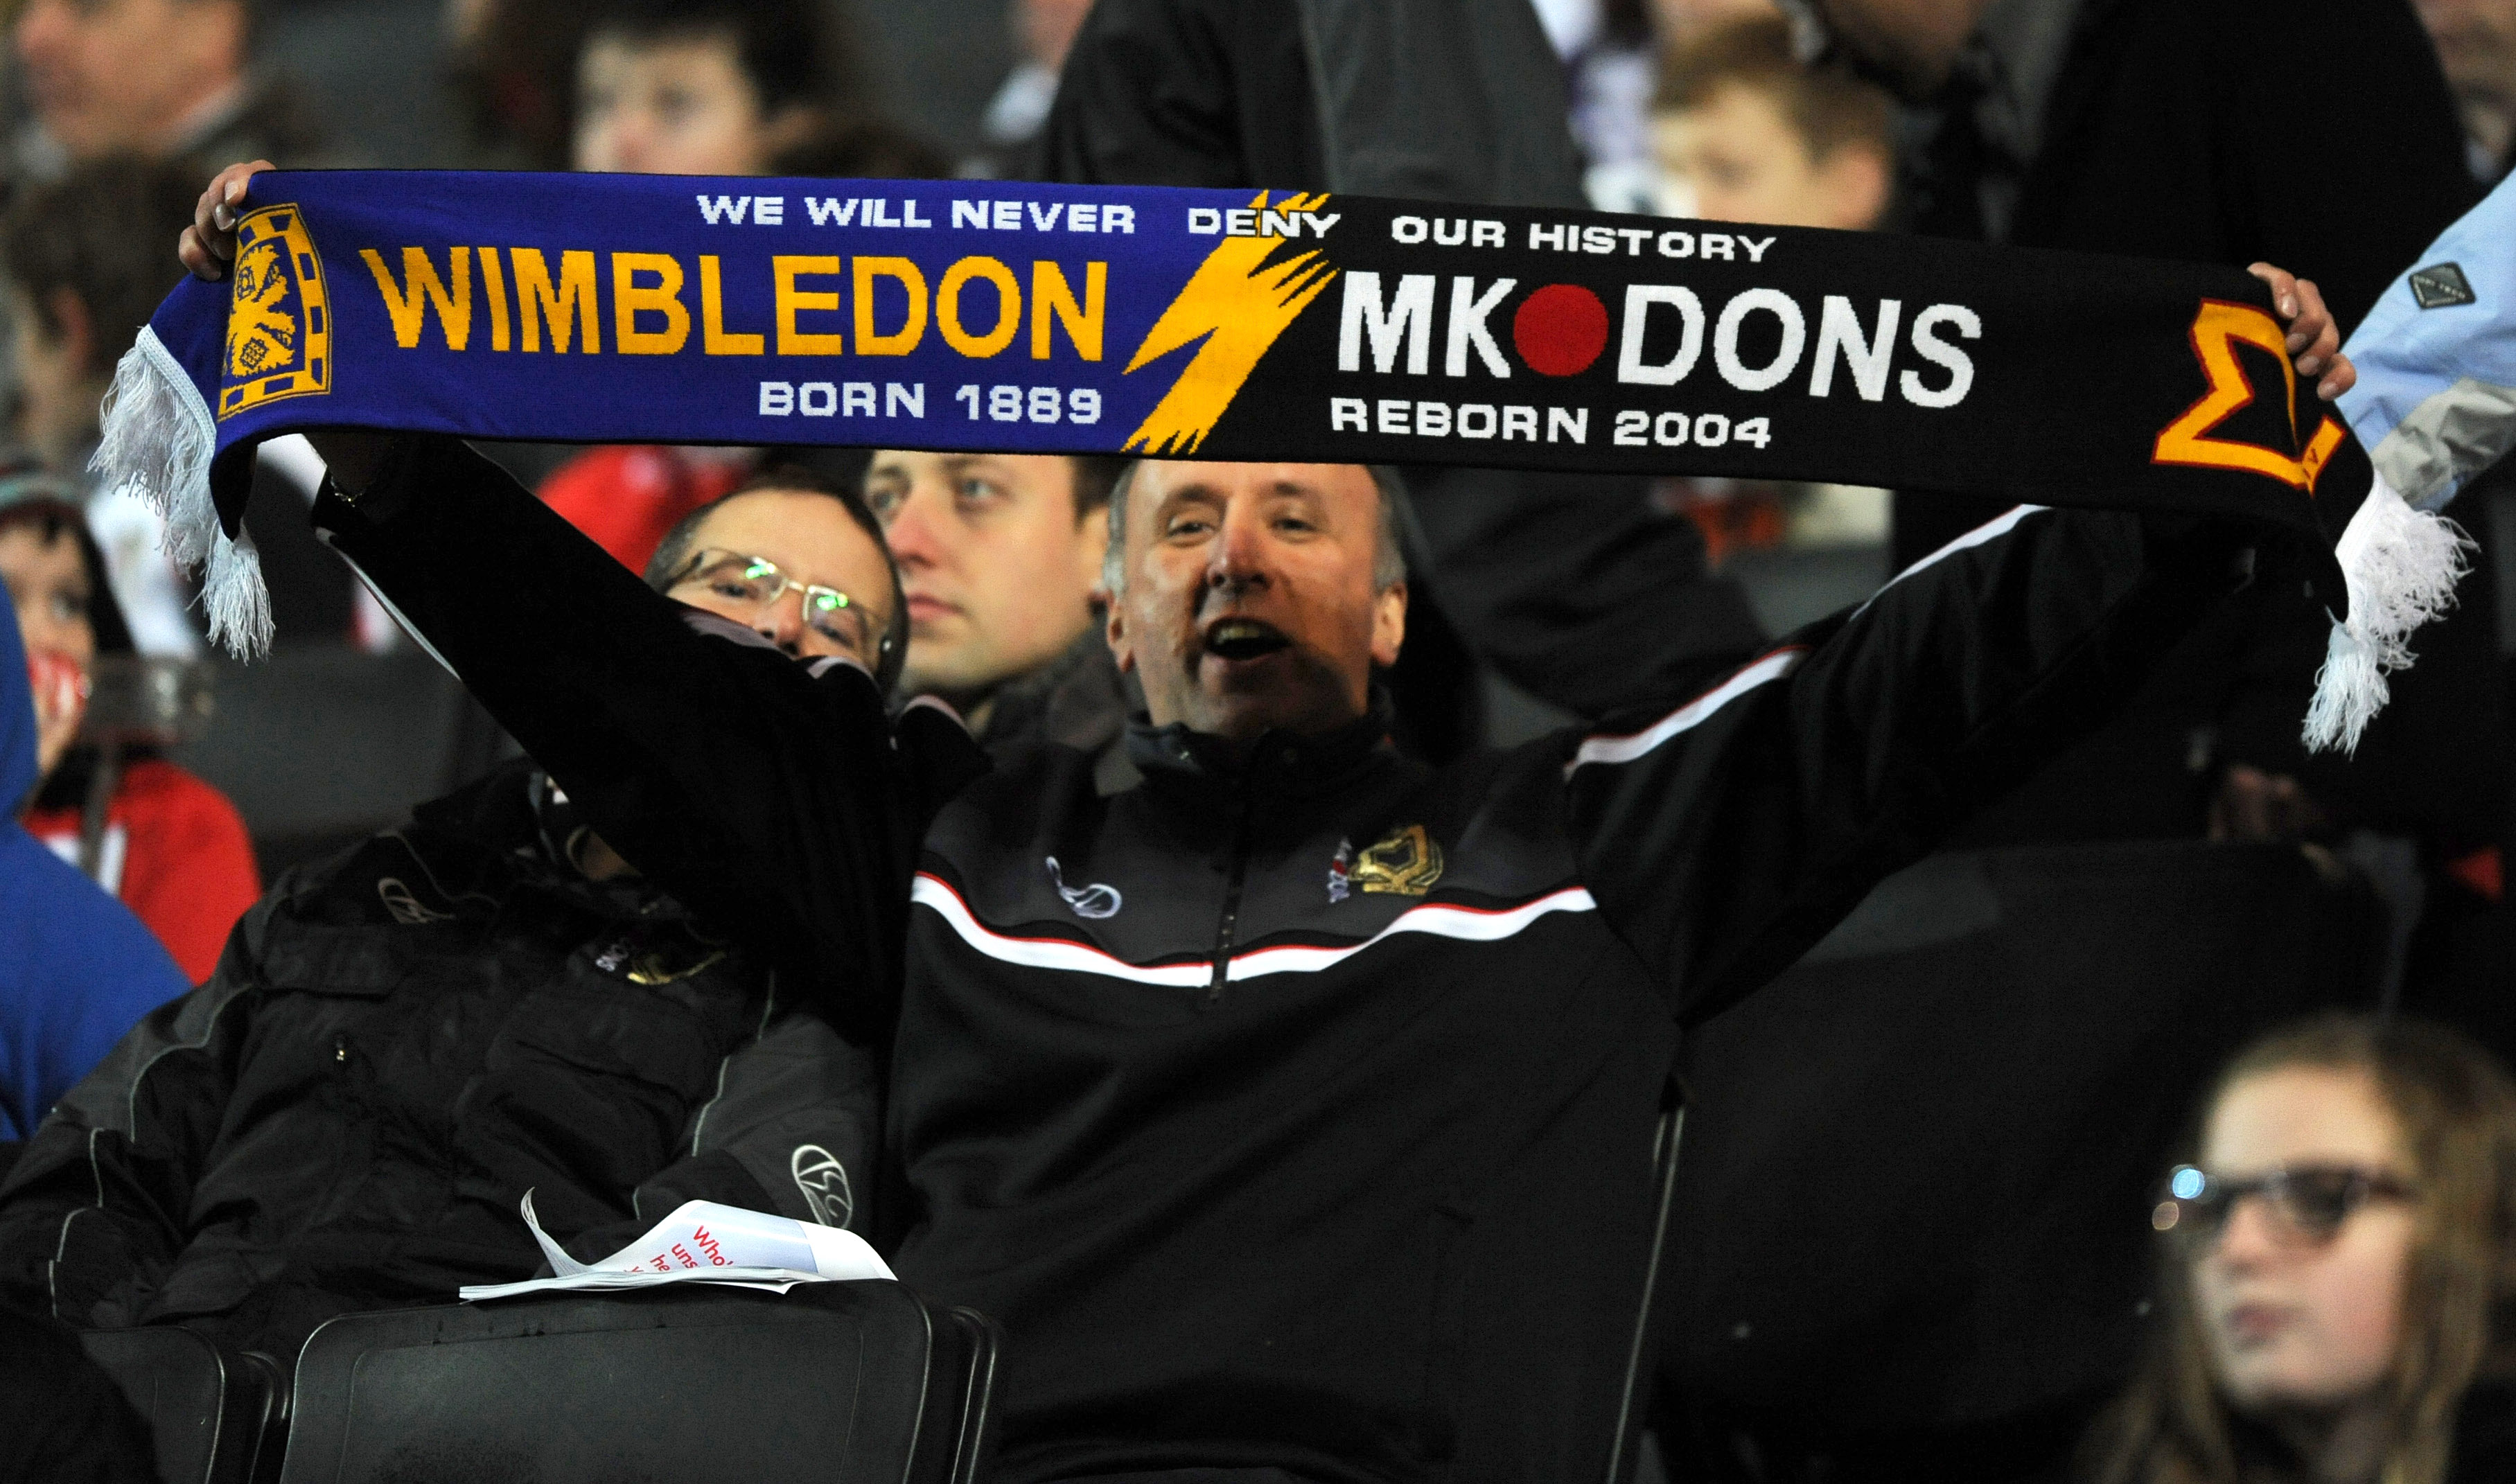 mk-dons-wimbledon.jpg